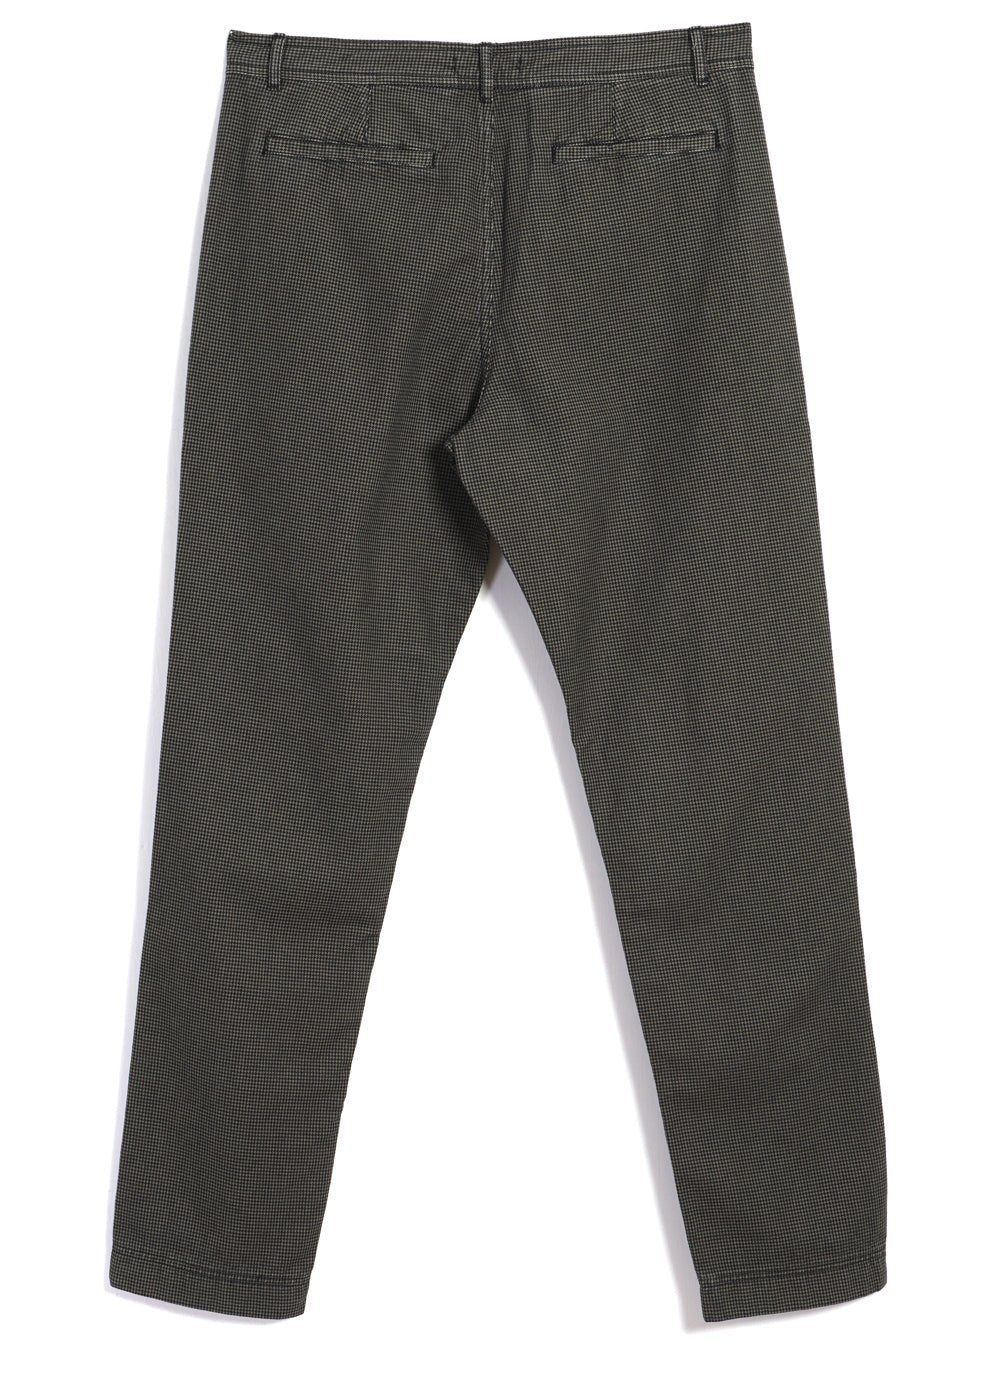 HANSEN GARMENTS - FRED | Regular Cut Work Trousers | Black Sand - HANSEN Garments